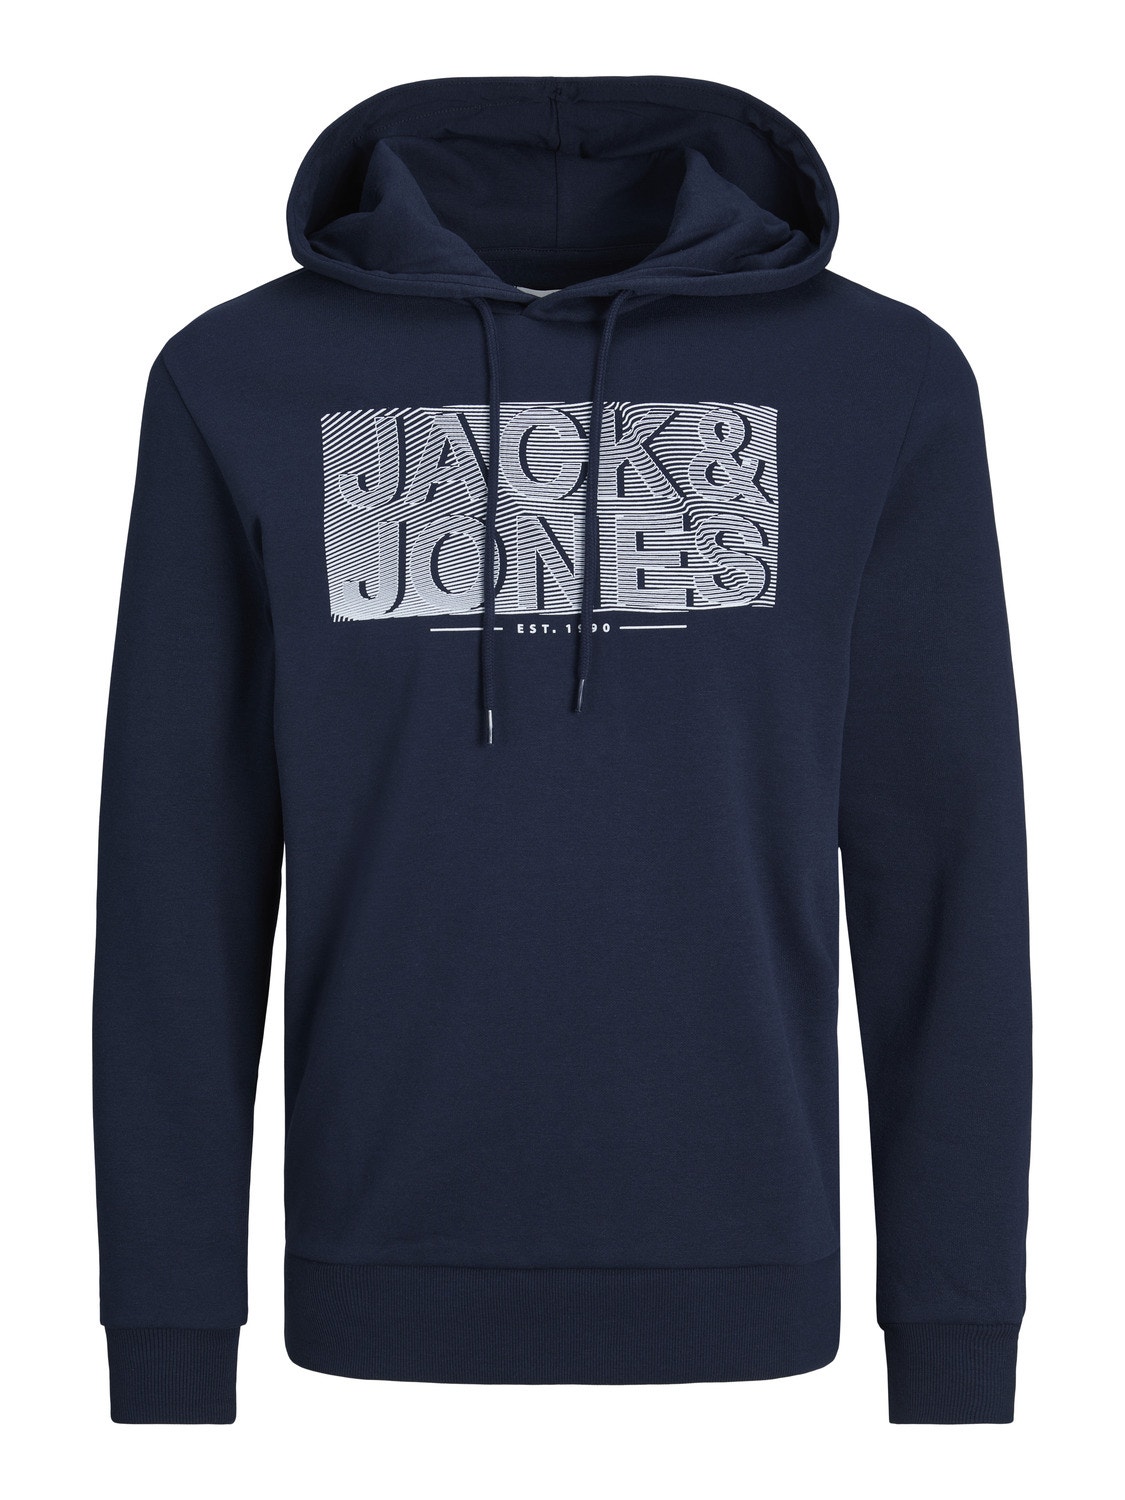 Jack & Jones Plus Size Sudadera con capucha Logotipo -Navy Blazer - 12245499